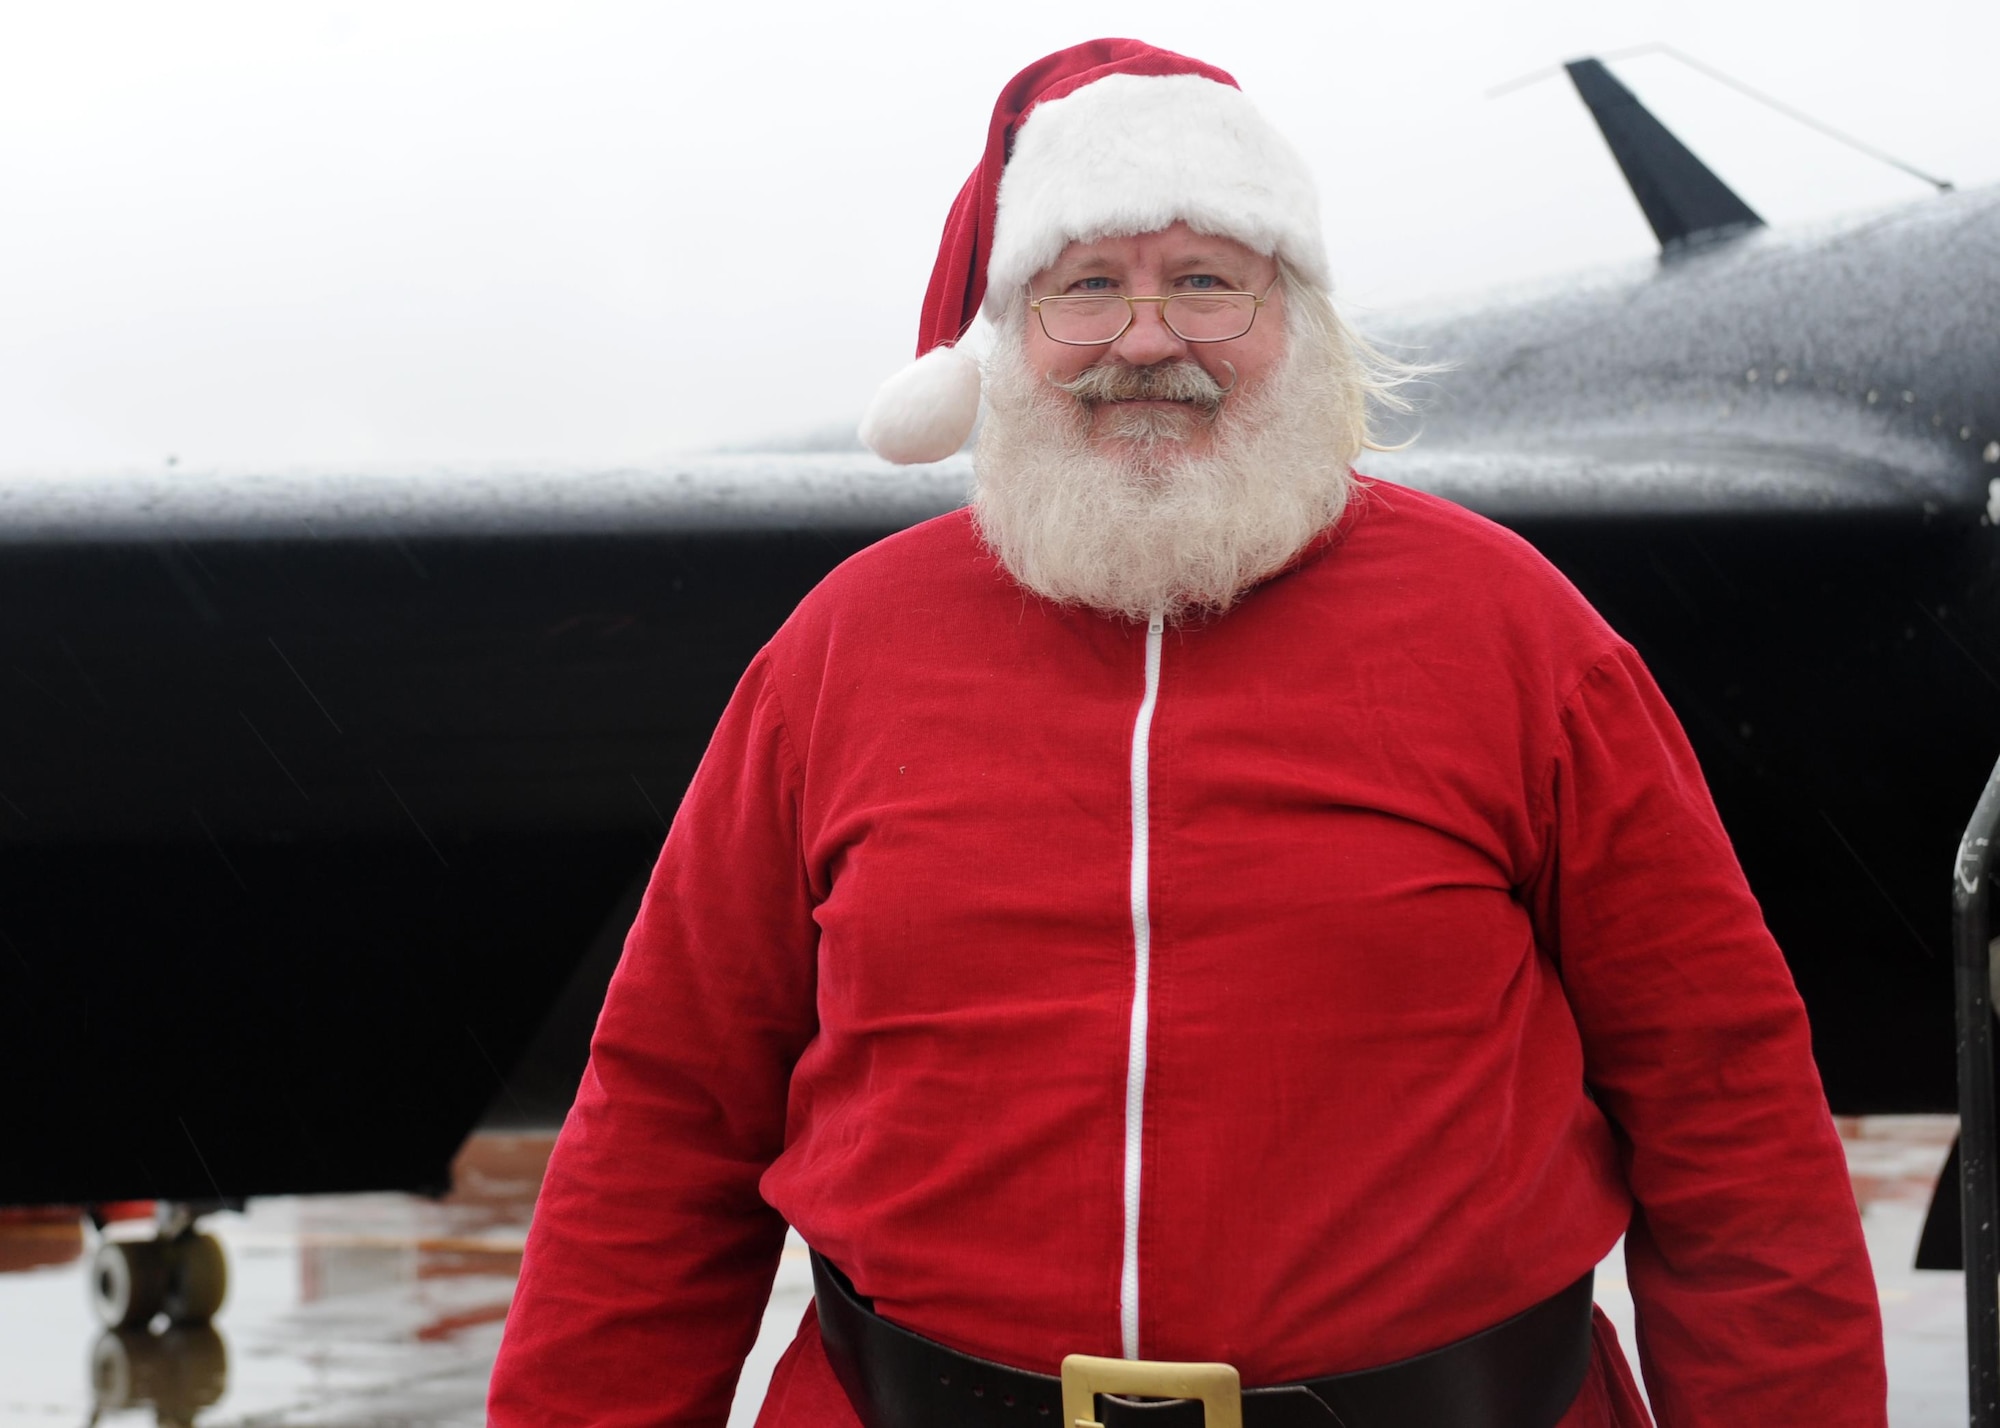 Santa Claus poses for a photo Dec. 10, 2016, at Beale Air Force Base, California. (U.S. Air Force photo by Senior Airman Ramon A. Adelan)